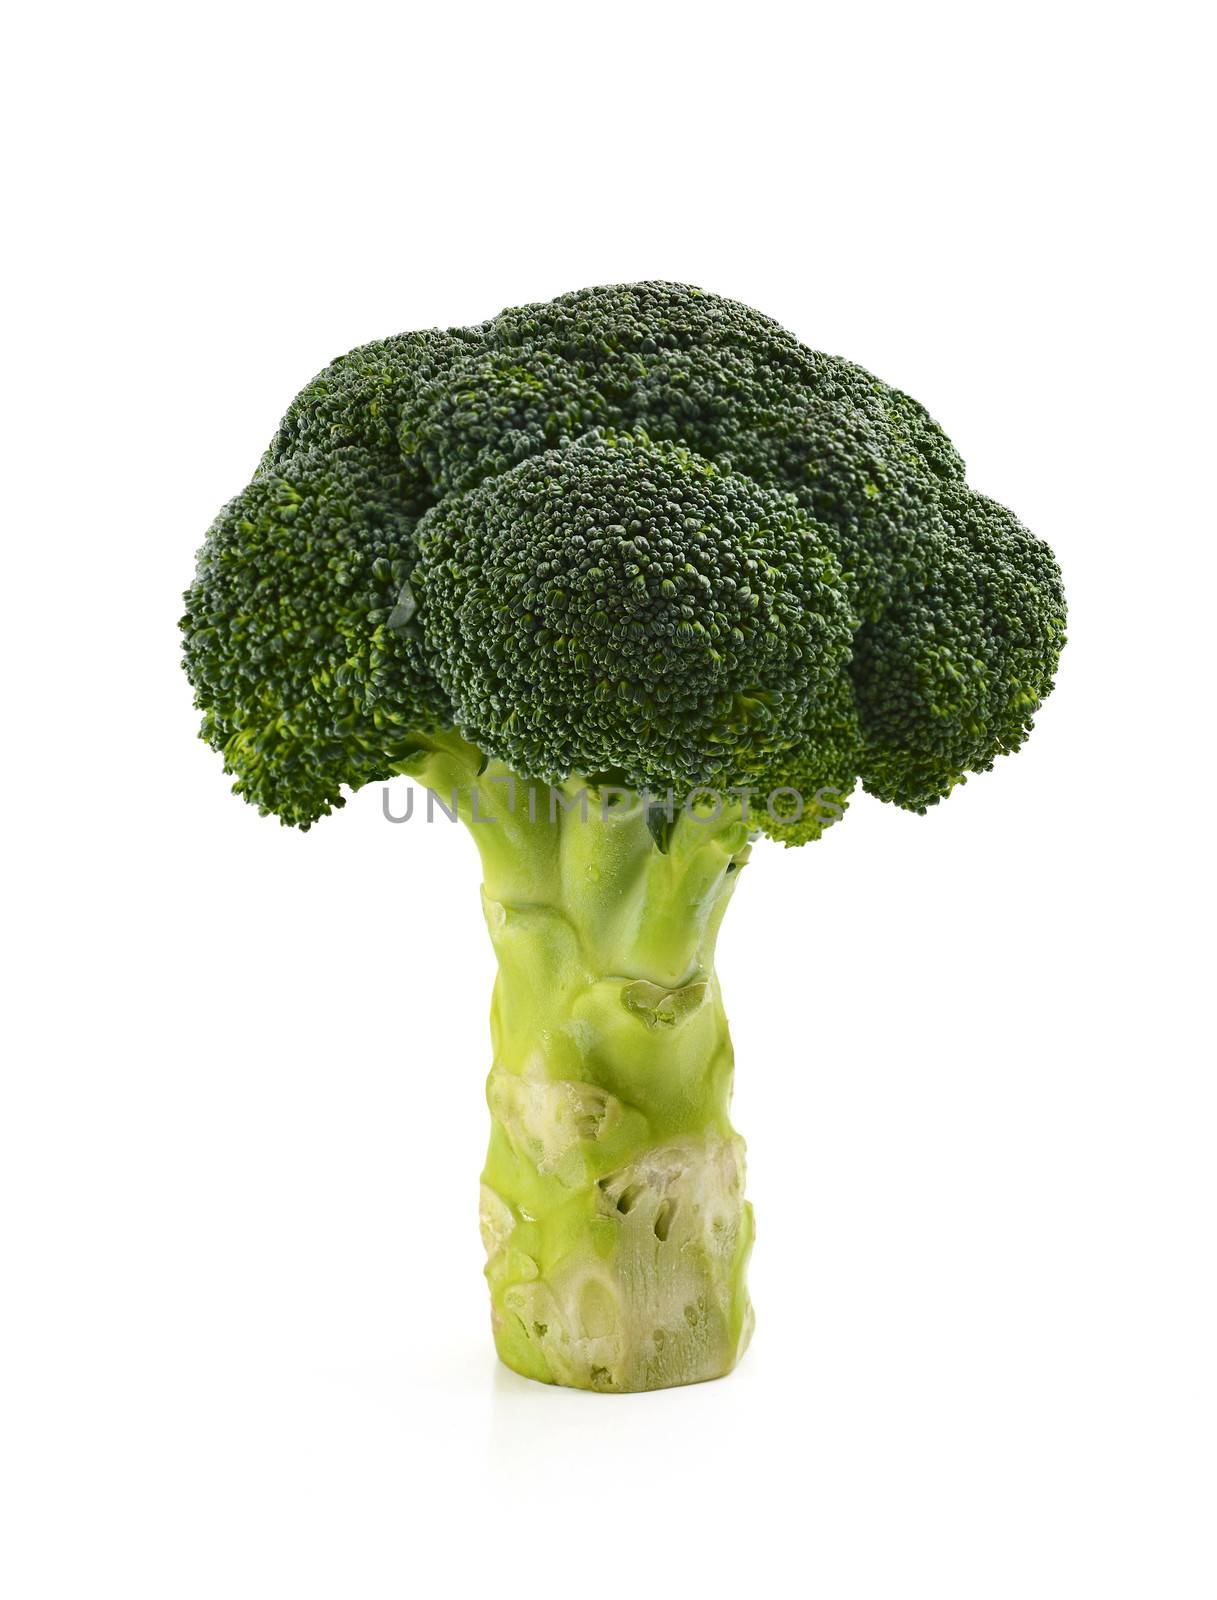 Broccoli floret by antpkr